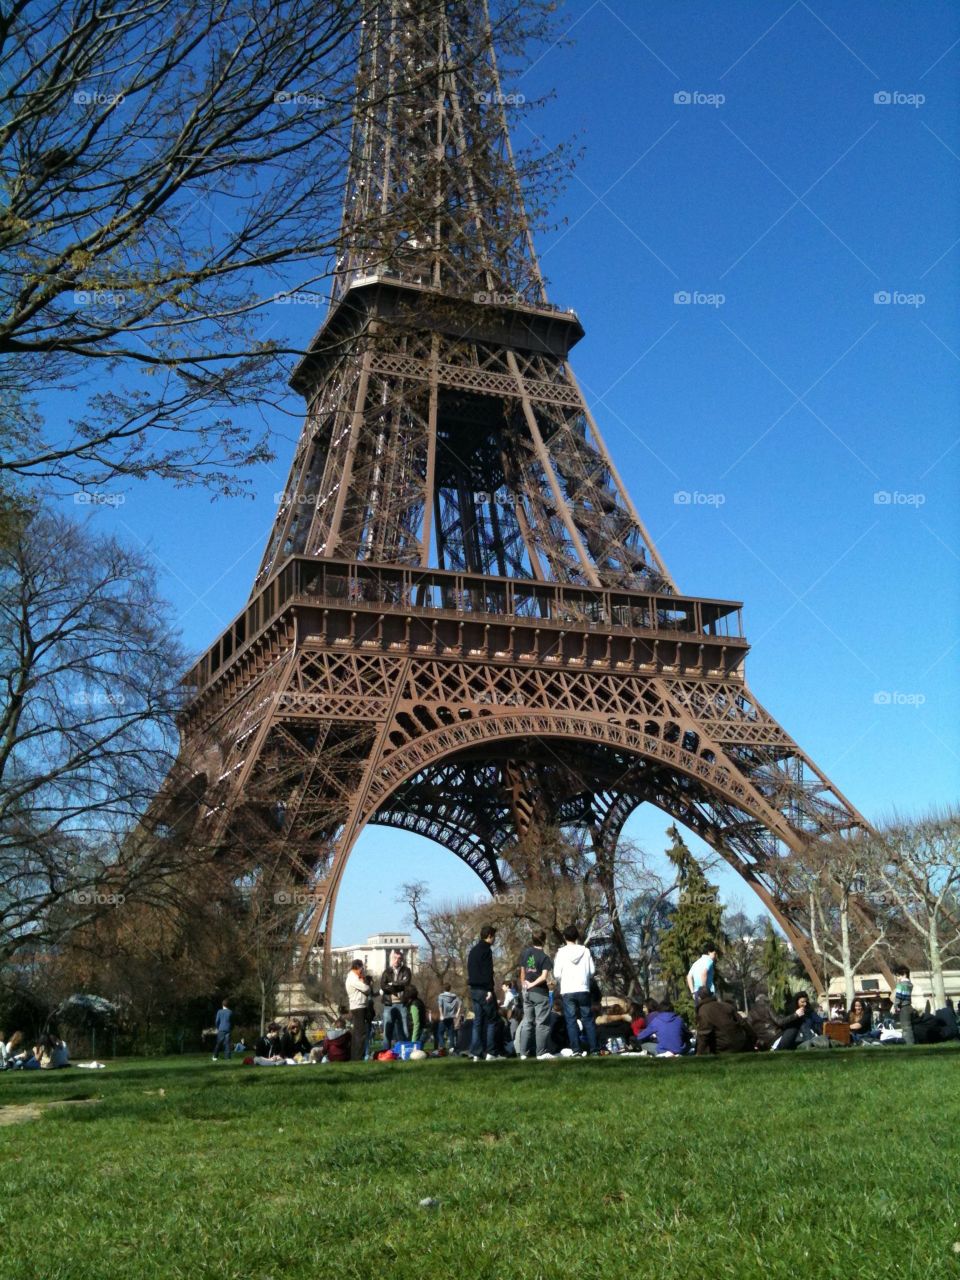 Eifel Tower. Paris